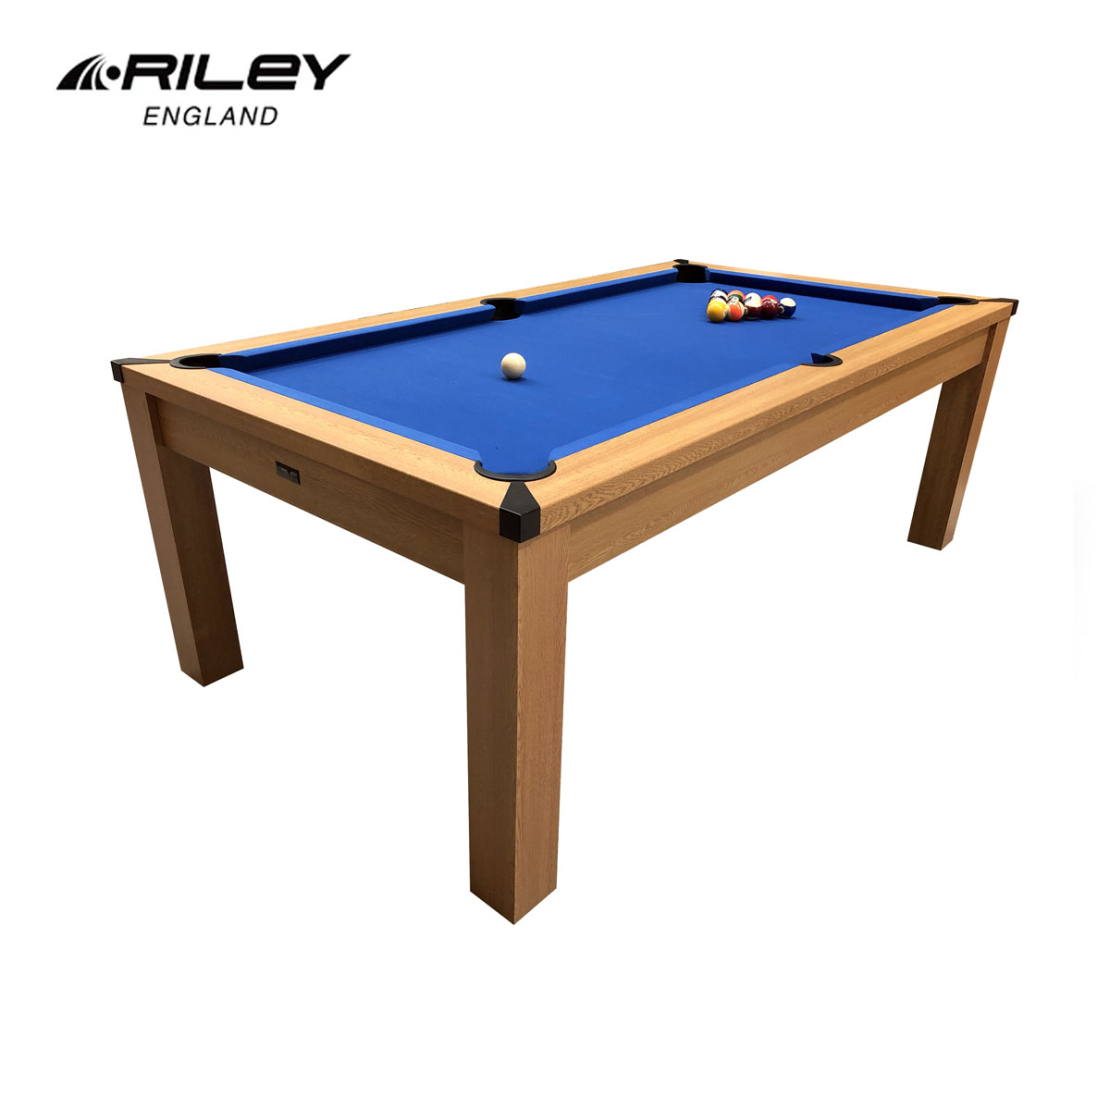 Riley אנגליה - 7ft Semi Pro שולחן ביליארד דגם פול פלטת עץ הכולל סט אביזרים צבע שחוראו צבע חום עץ אלון